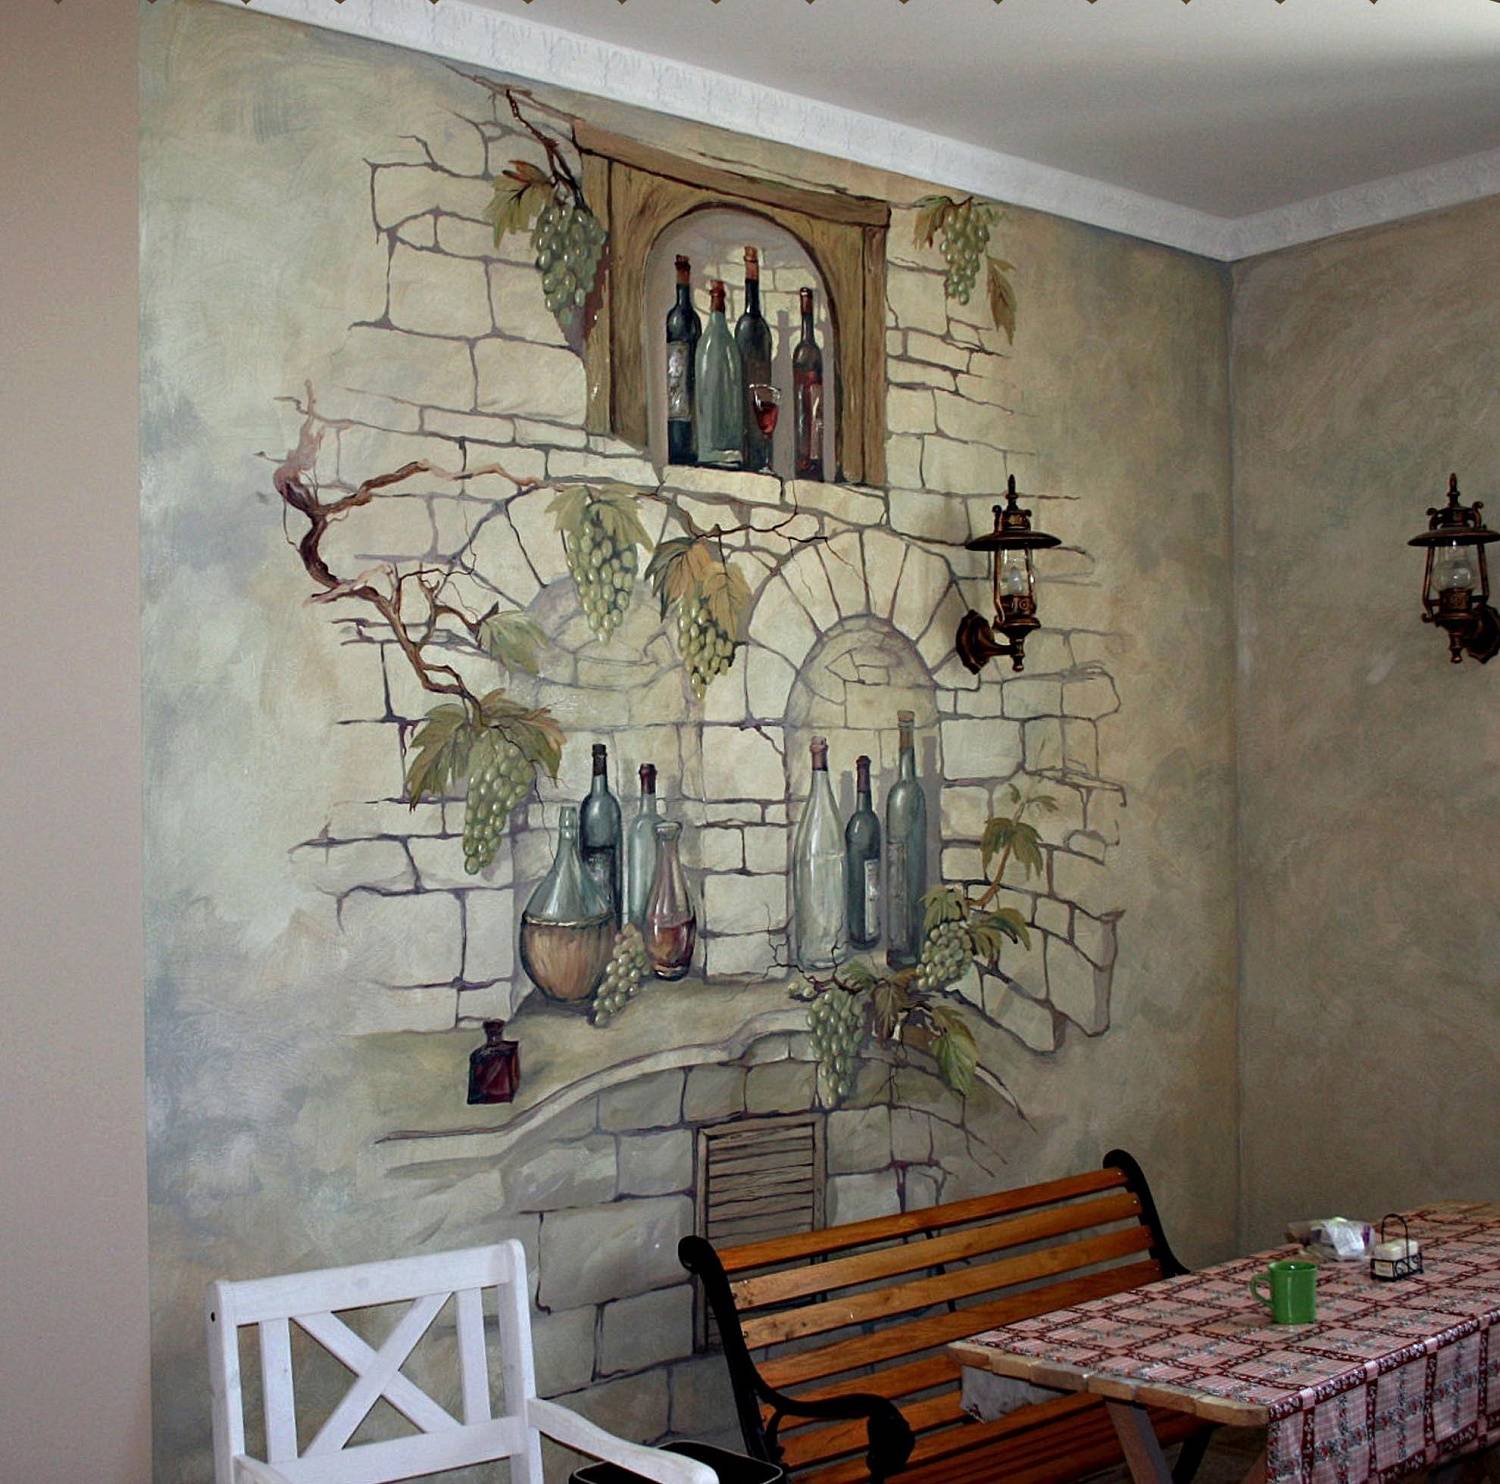 Роспись стен своими руками фото, стили, трафареты, техника. роспись стен акриловыми красками